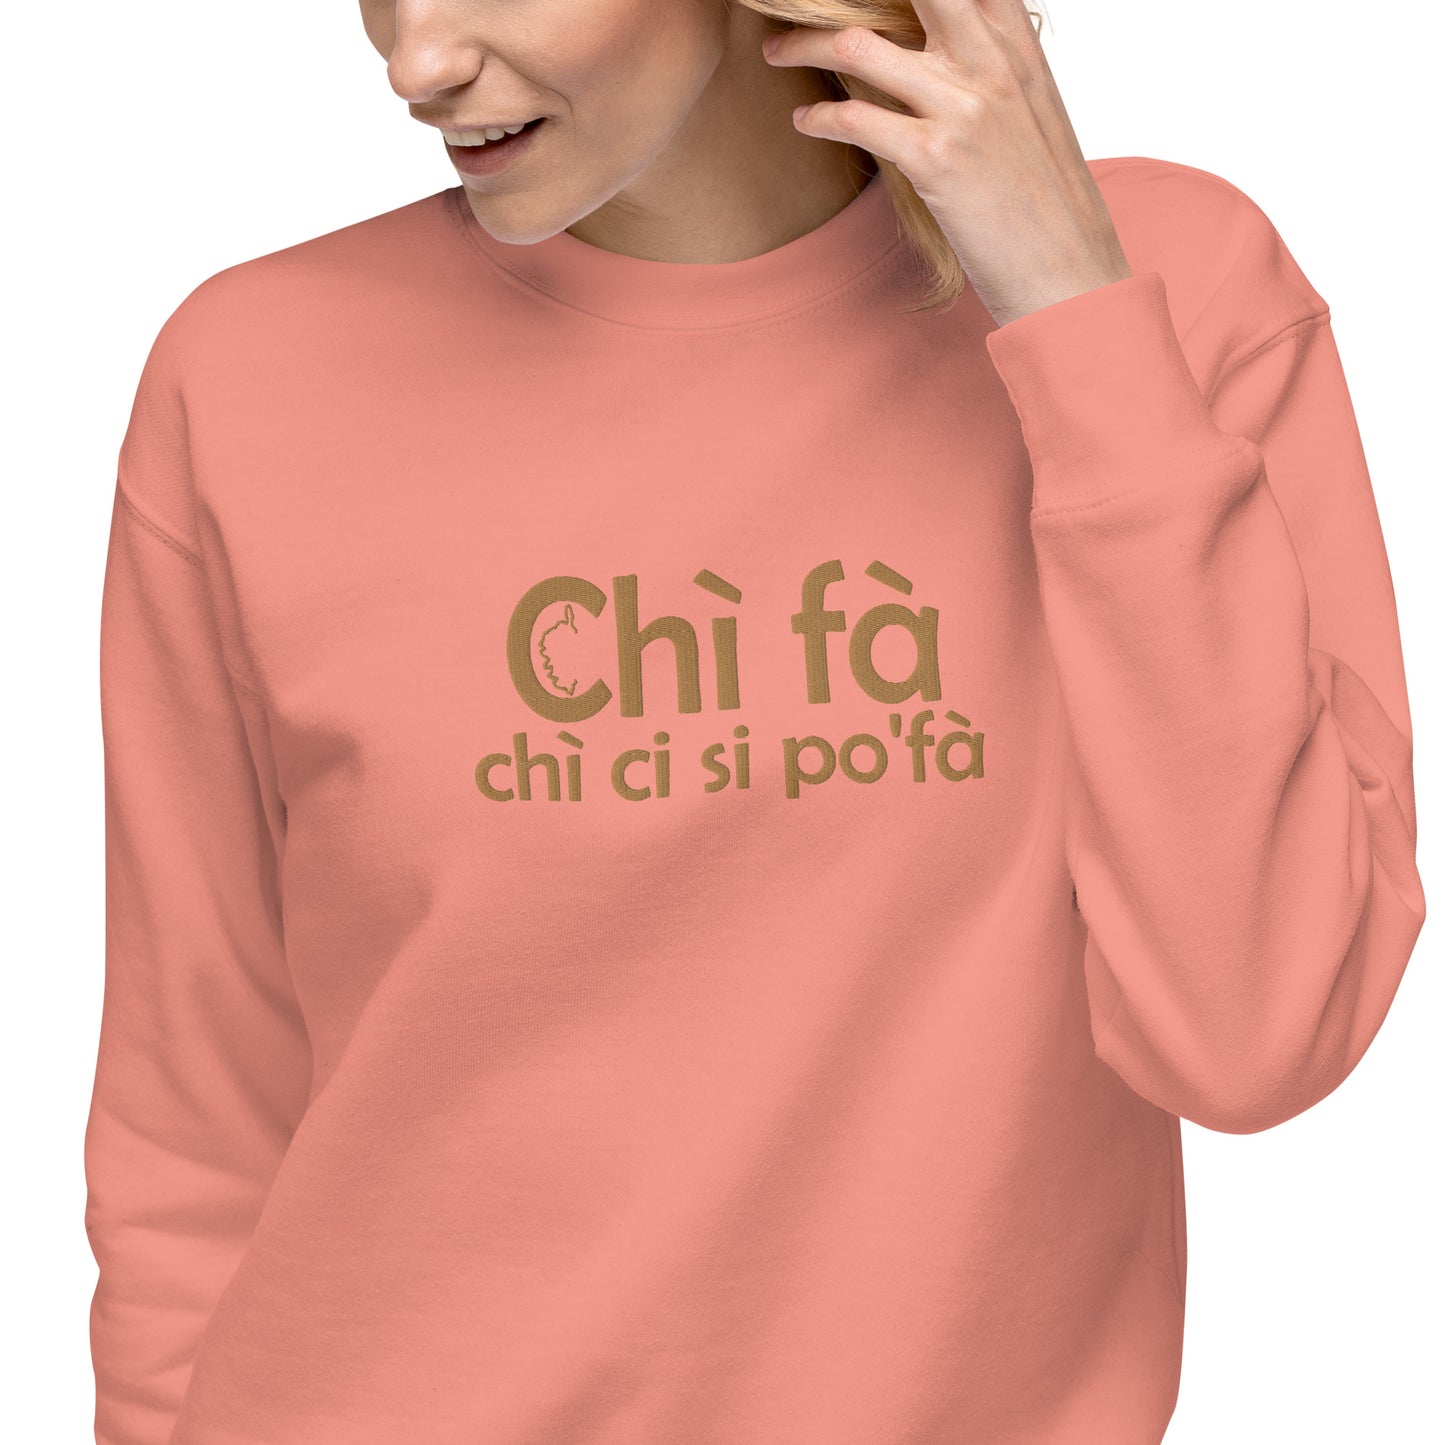 Sweatshirt premium Brodé Chi Fà